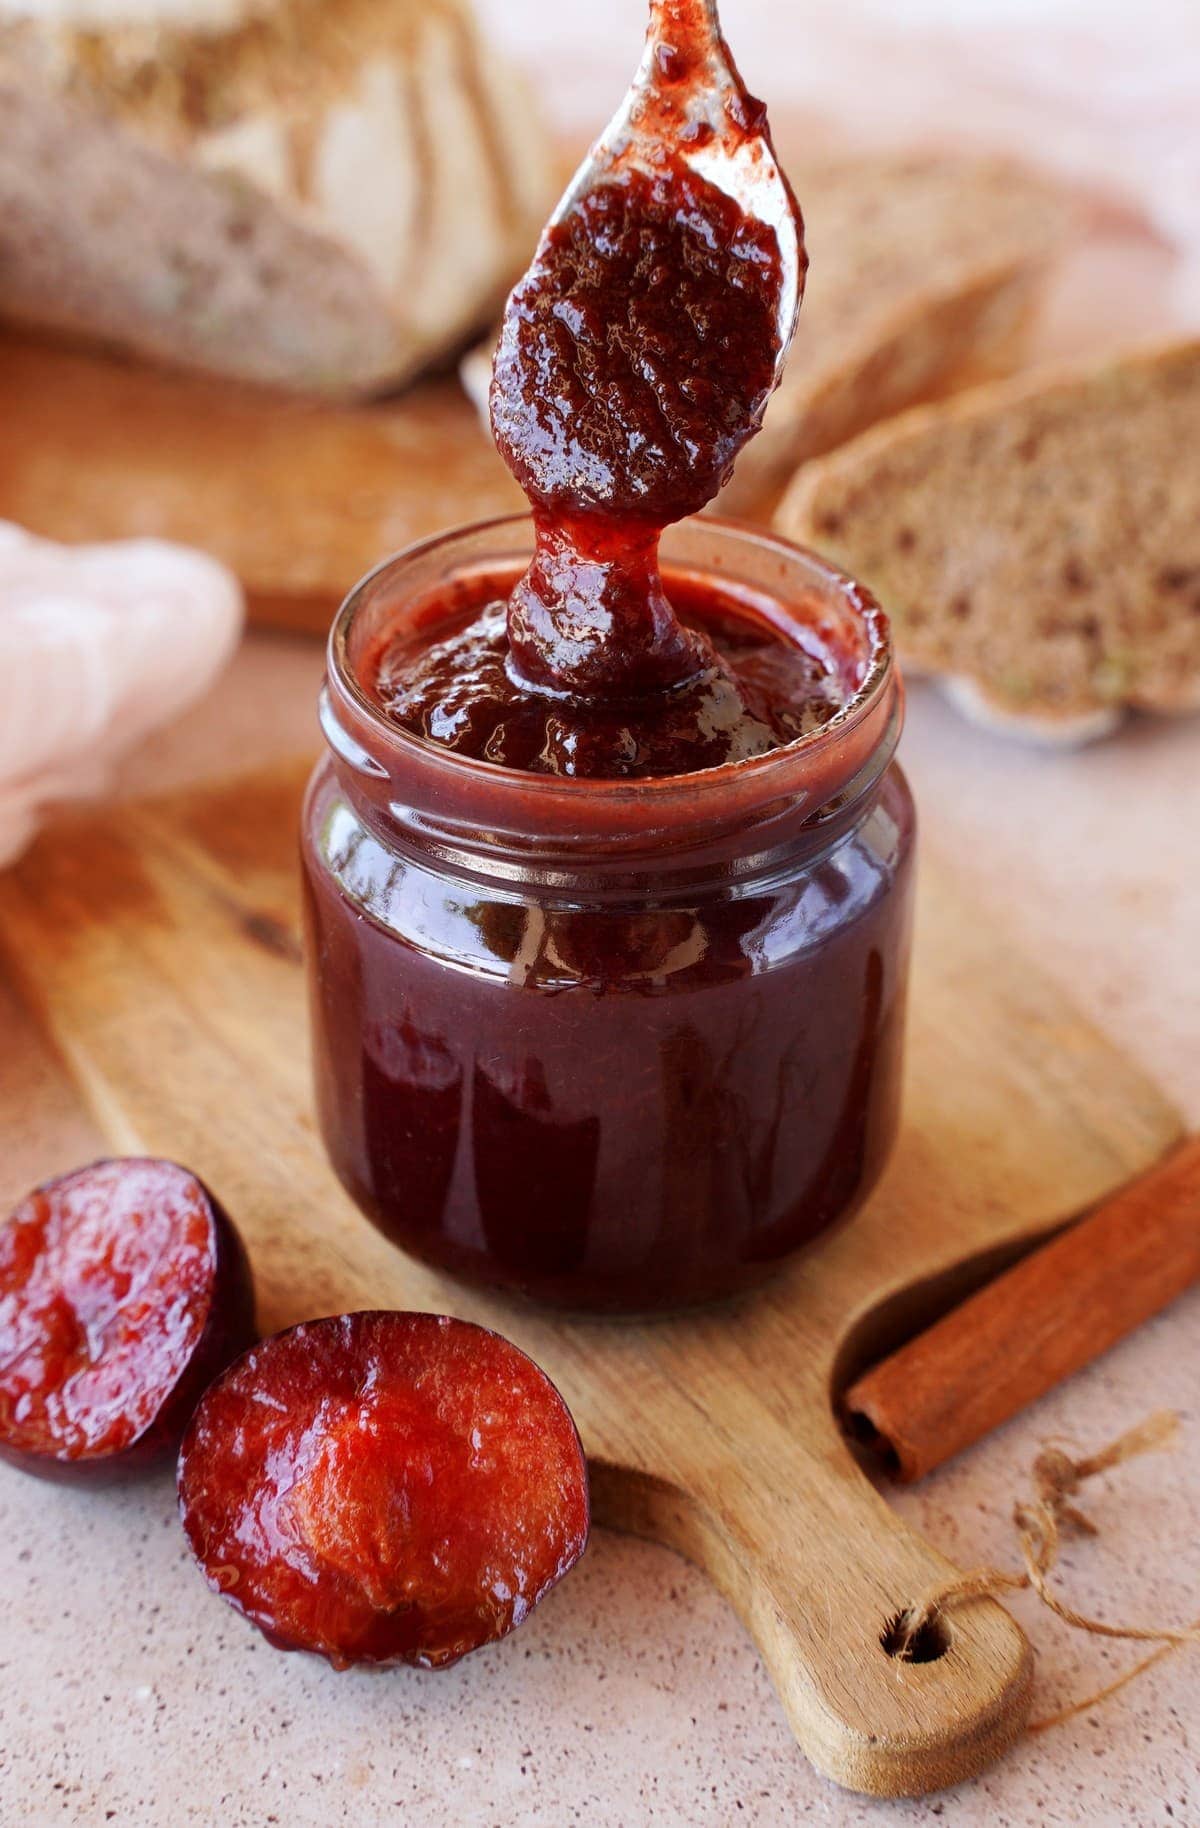 plum jam in jar with spoon